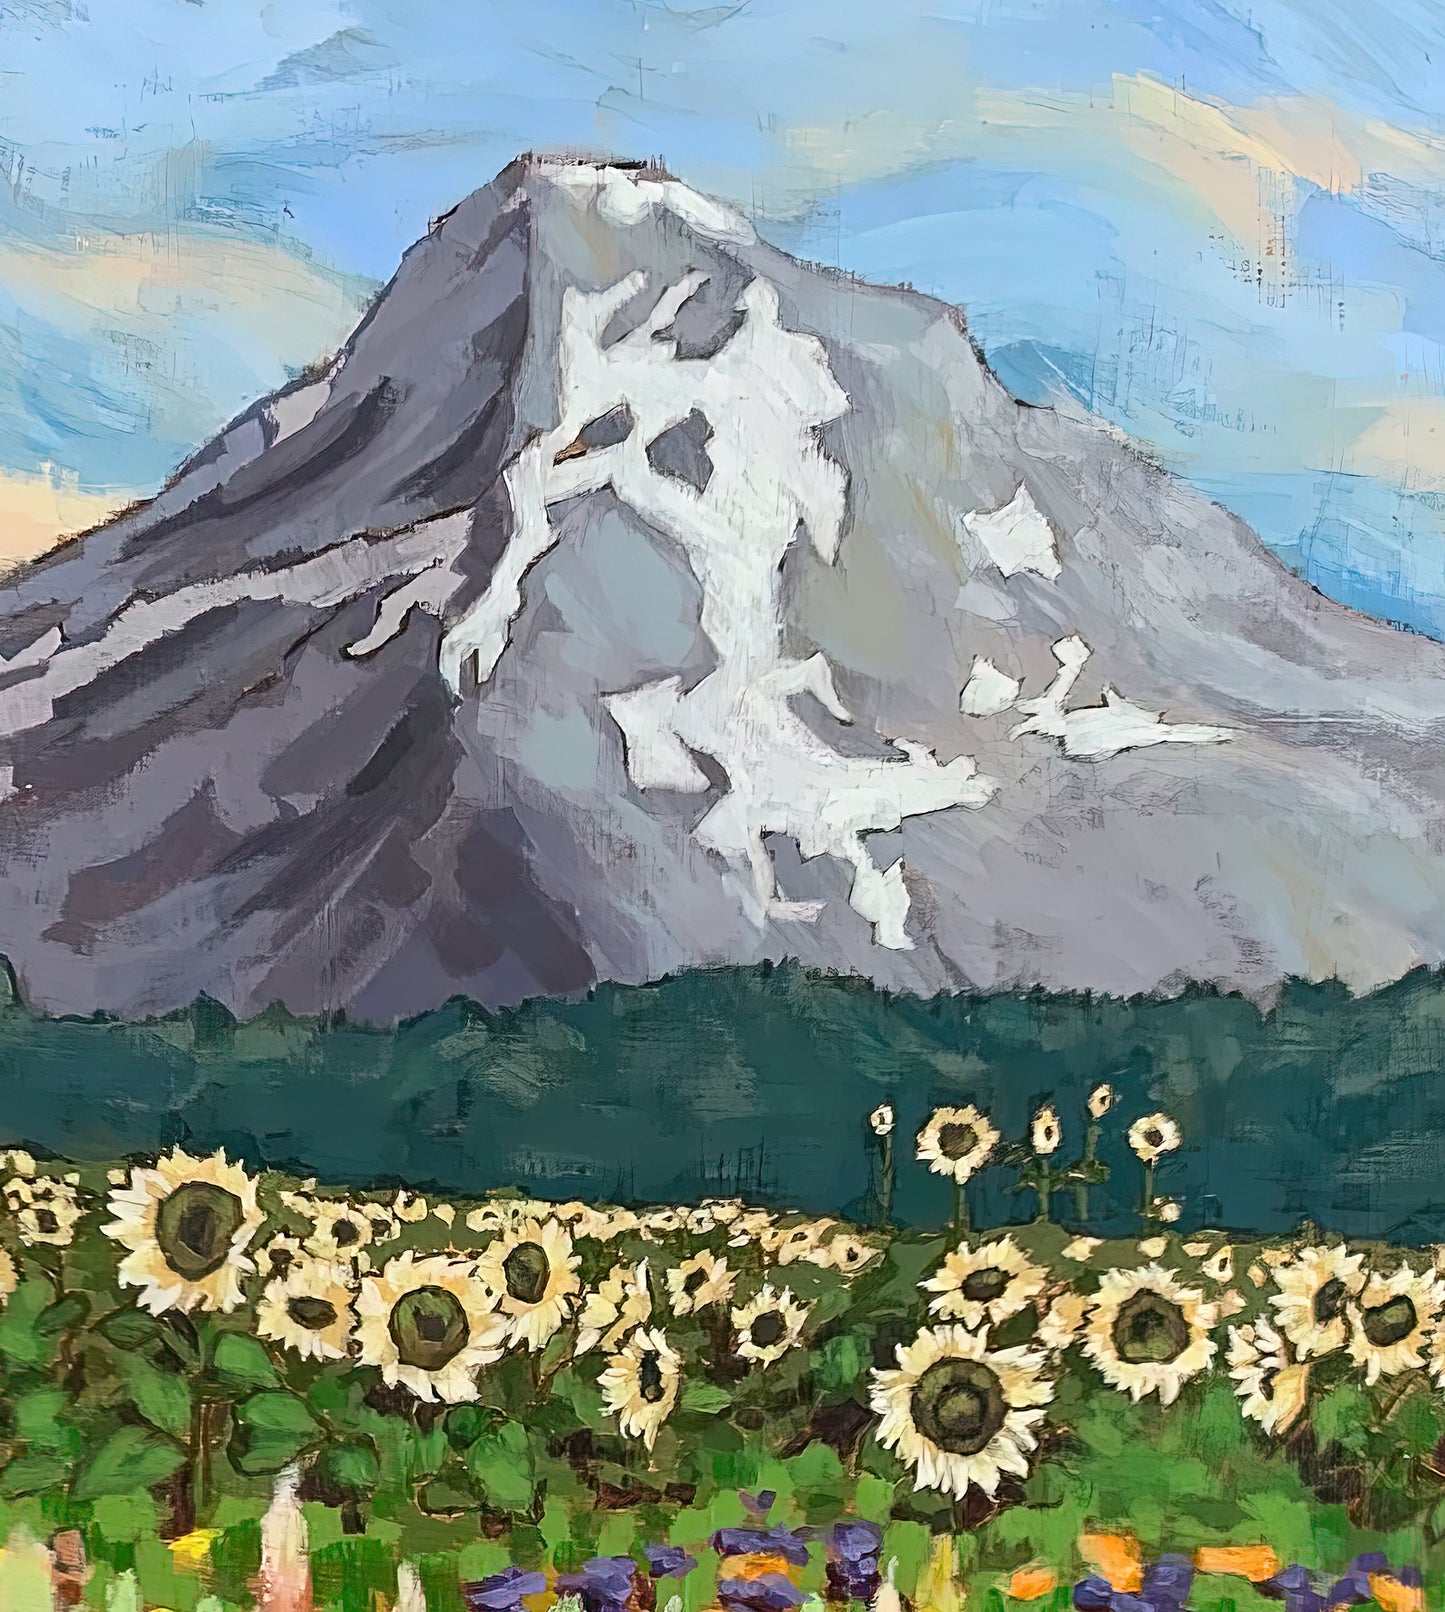 Jennifer's Garden - a field of flowers with Mt Hood art print